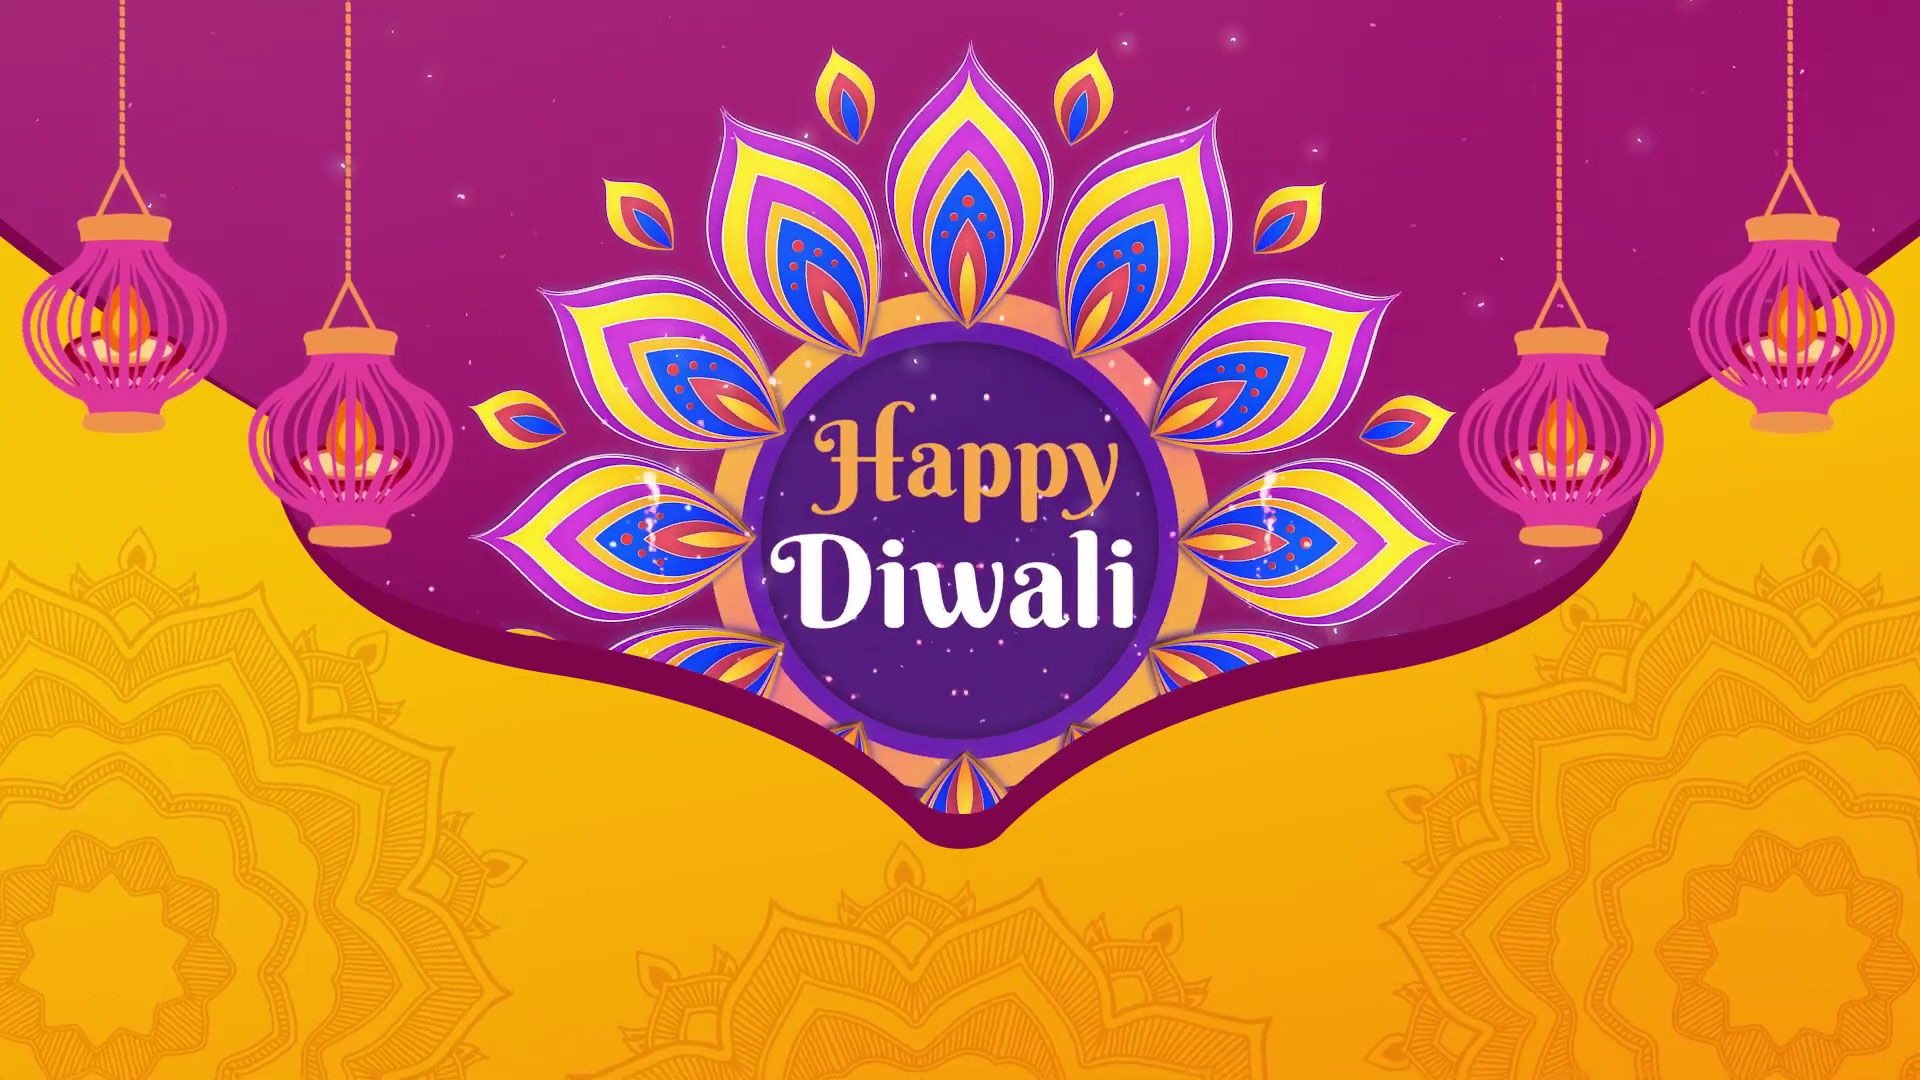 Happy Diwali Wishes and Diwali Greetings | All Design Creative